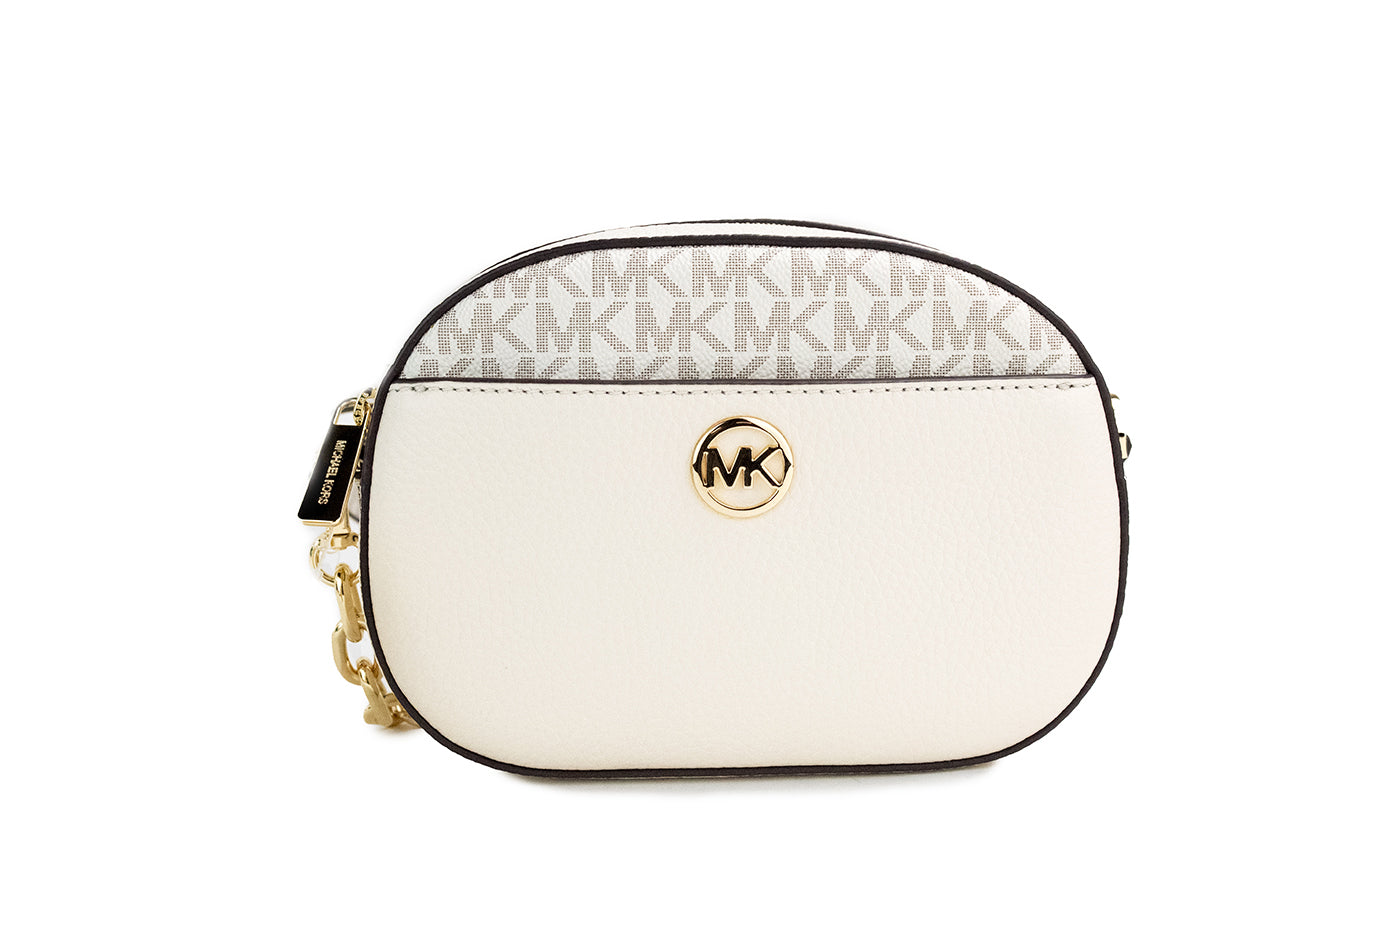 Buy Michael Kors Women Cream Jacquard Monogram Crossbody Bag Online -  914009